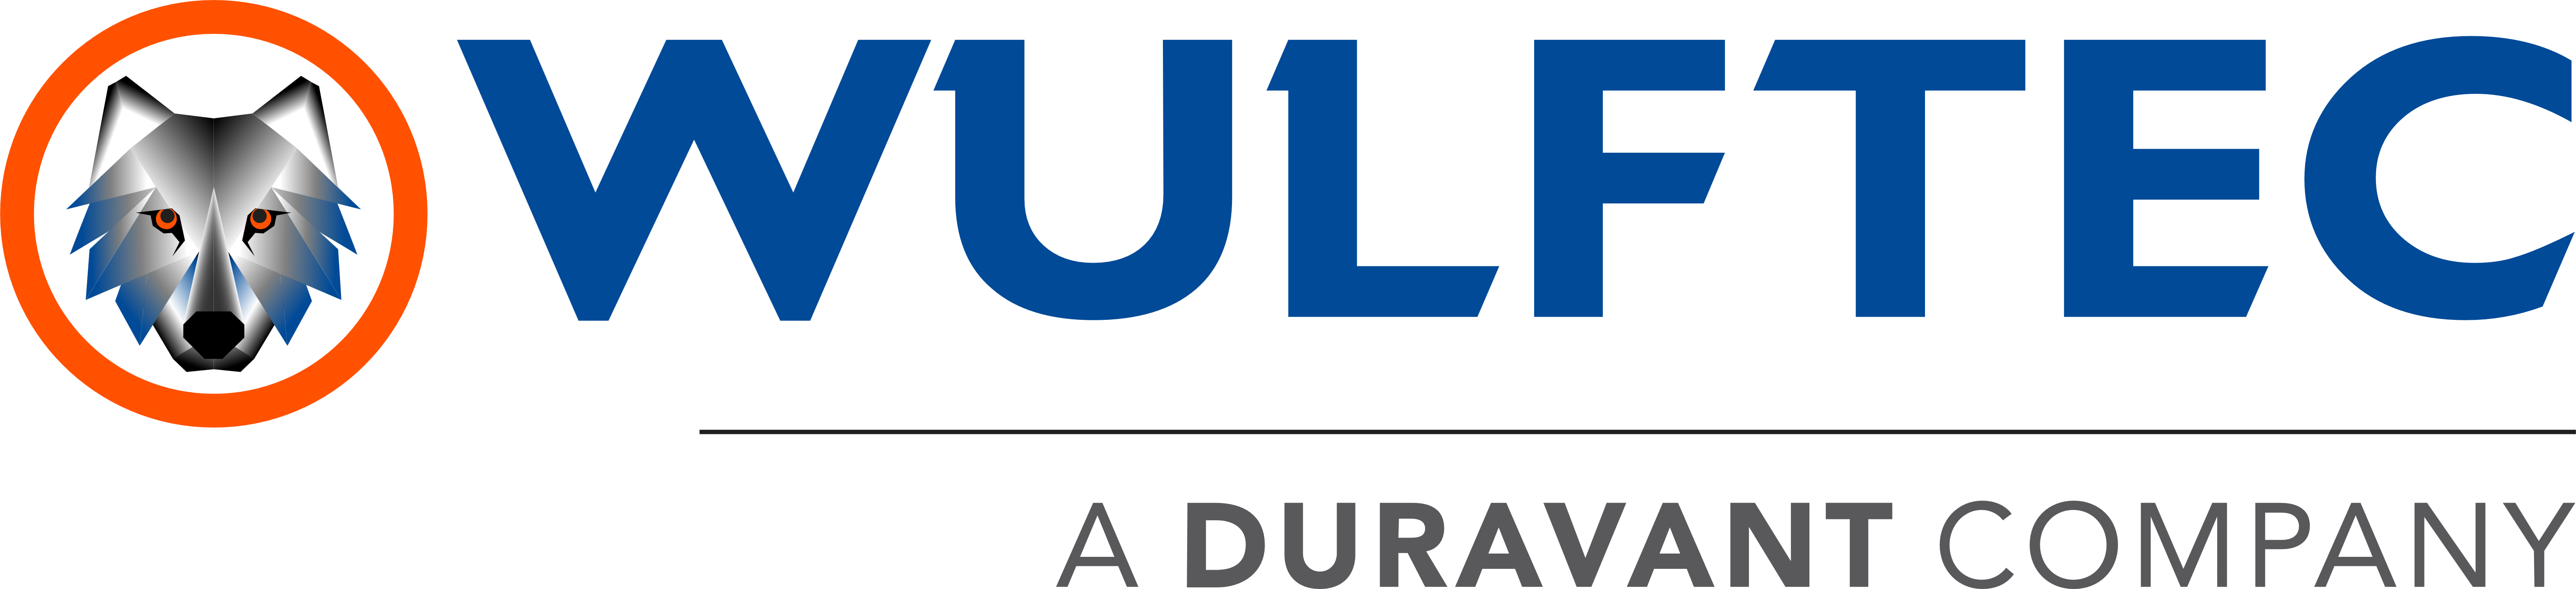 Wulftec logo